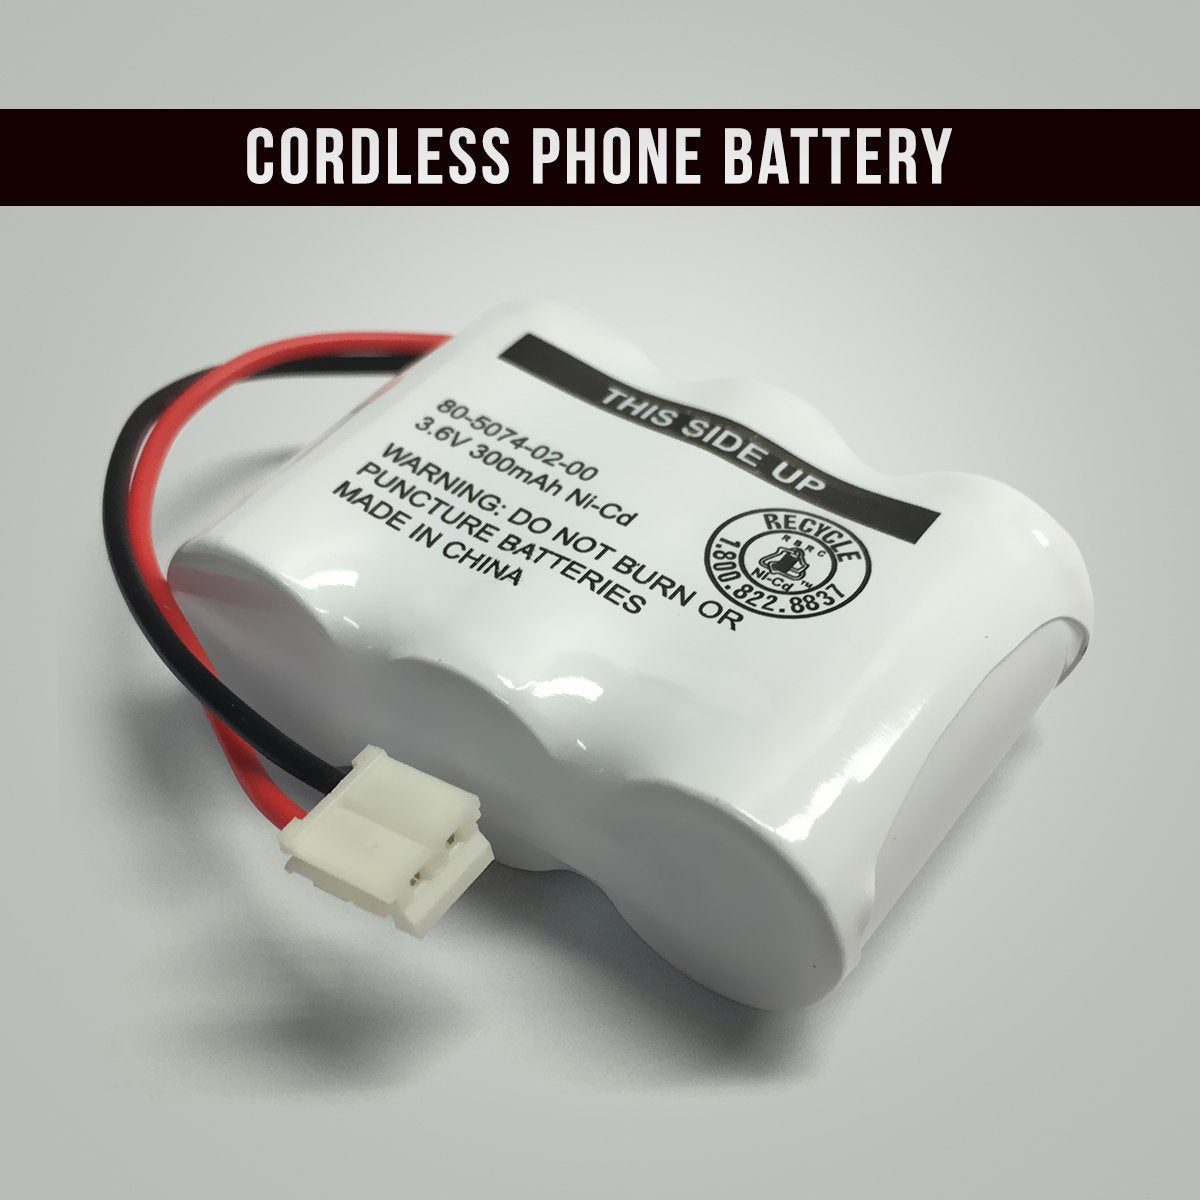 Sharp CL-255 Cordless Phone Battery